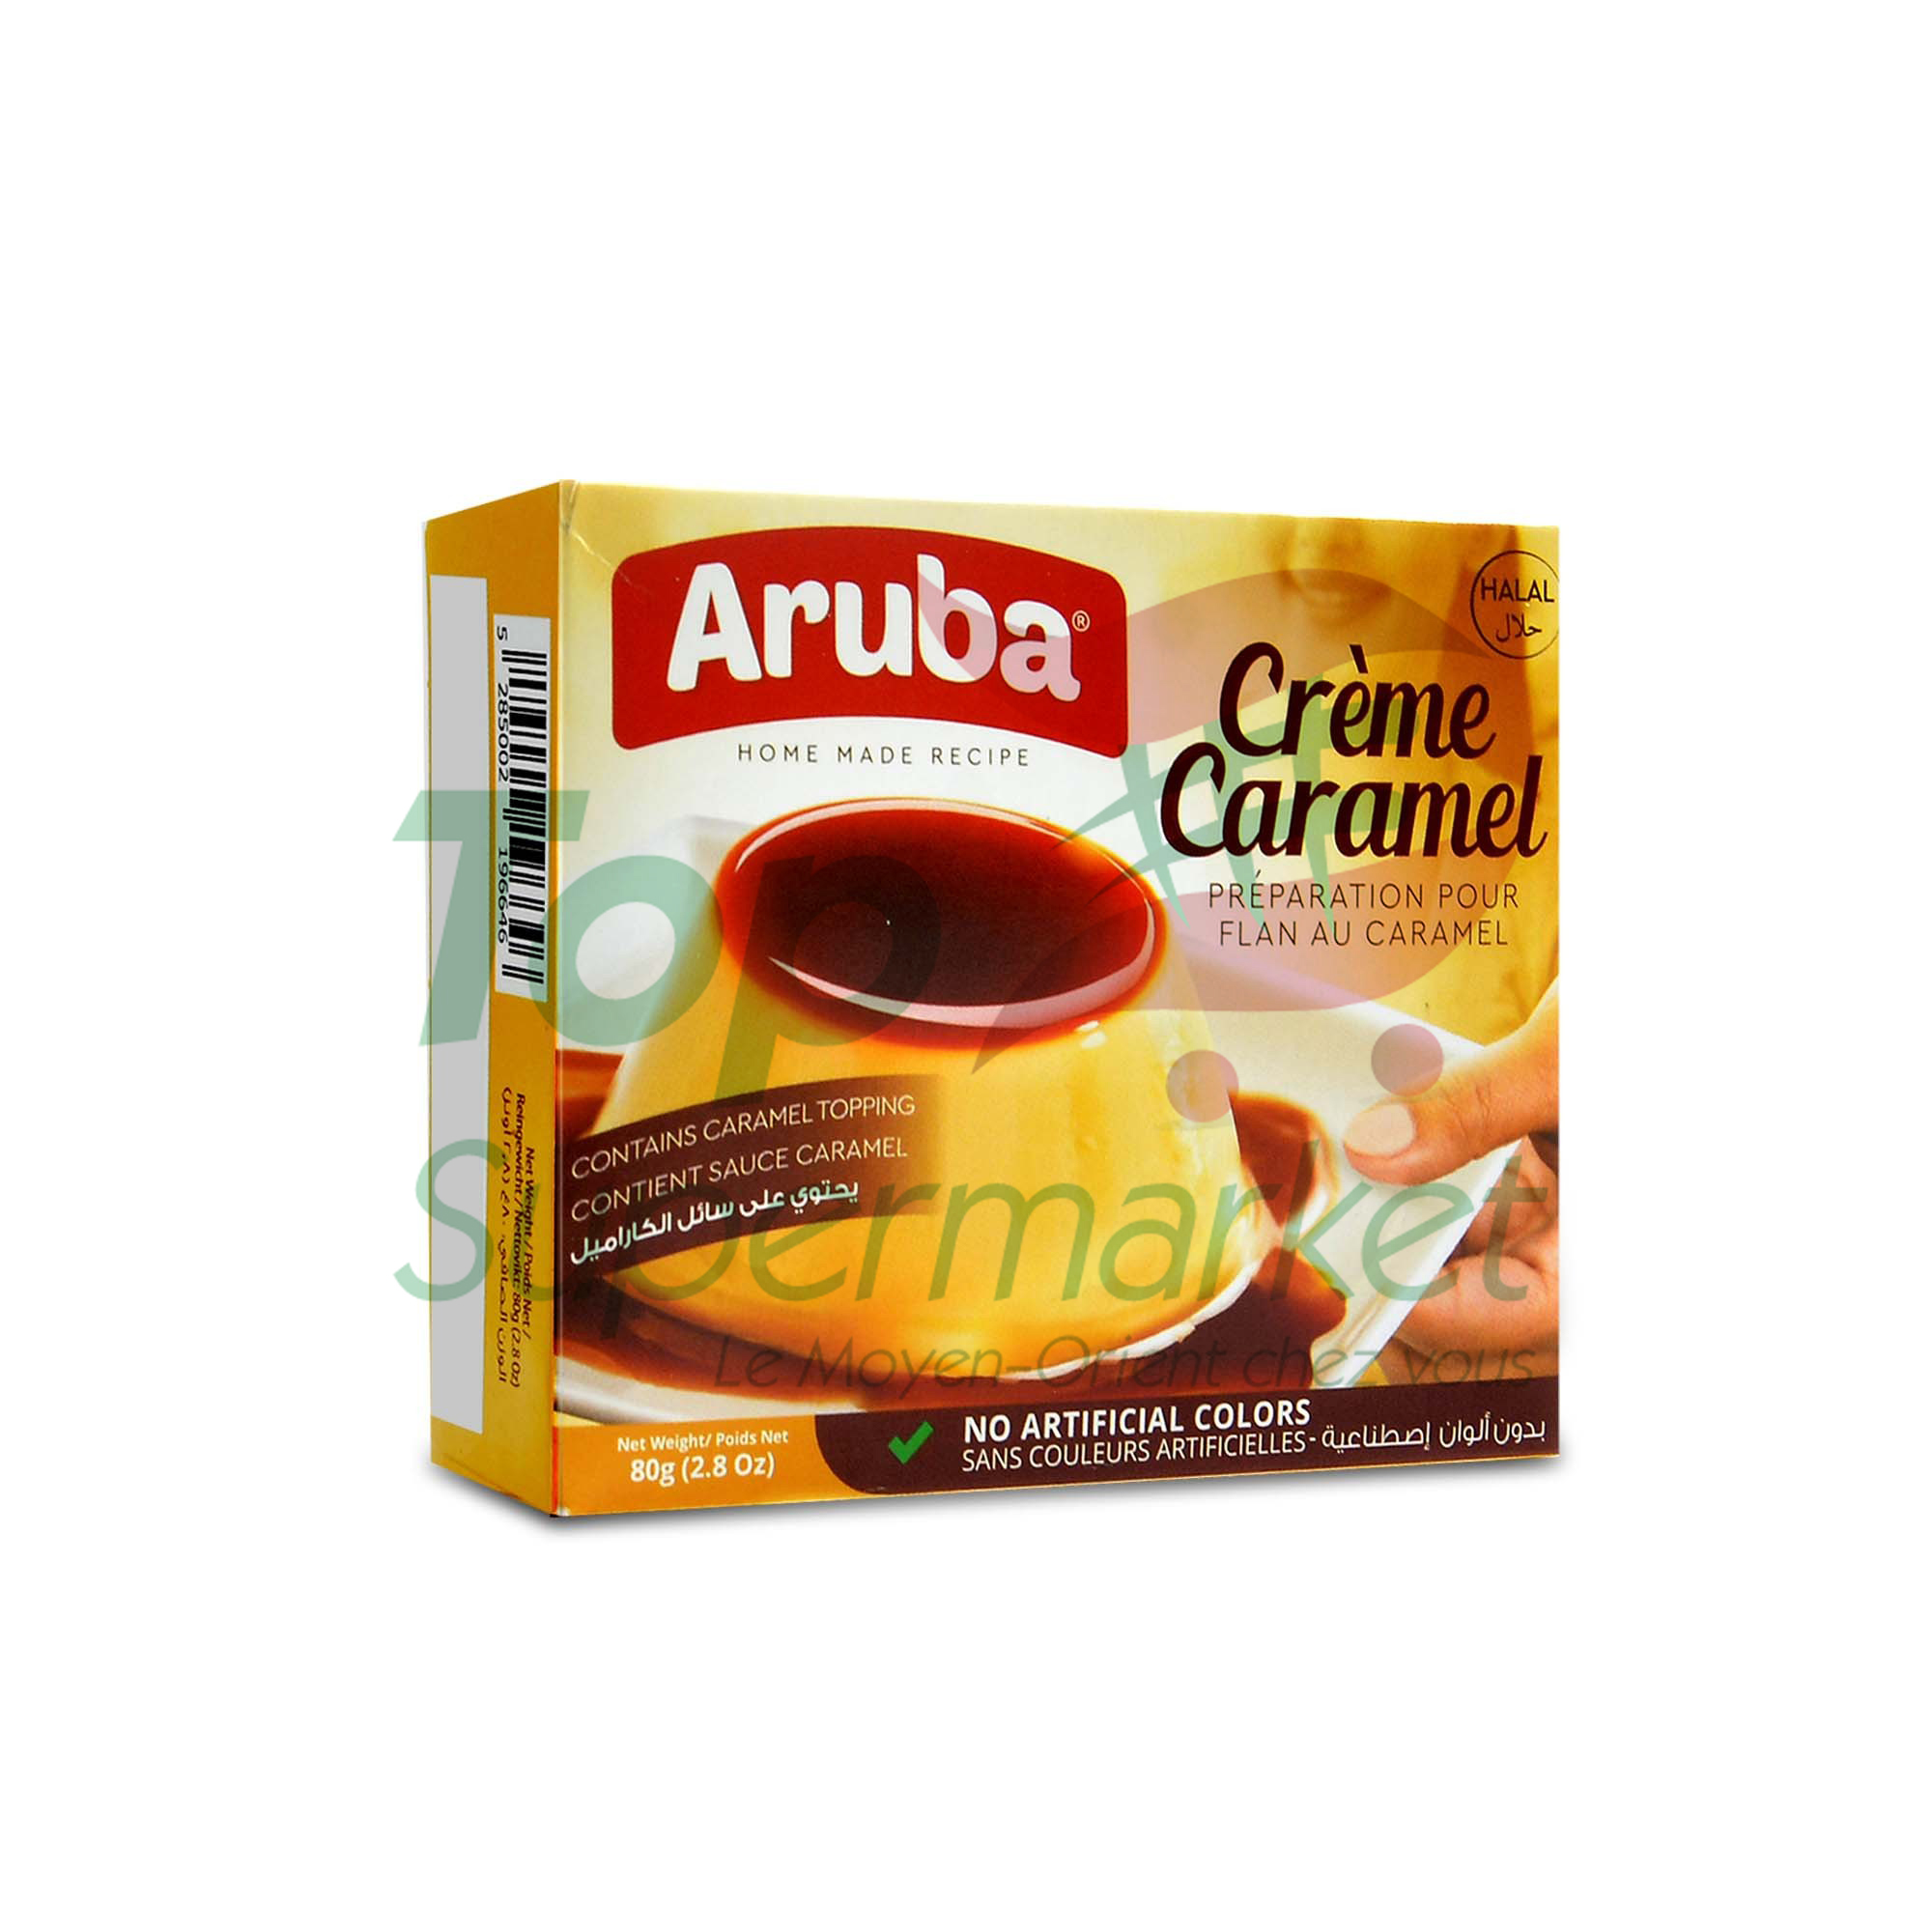 Aruba Creme Caramel 80g